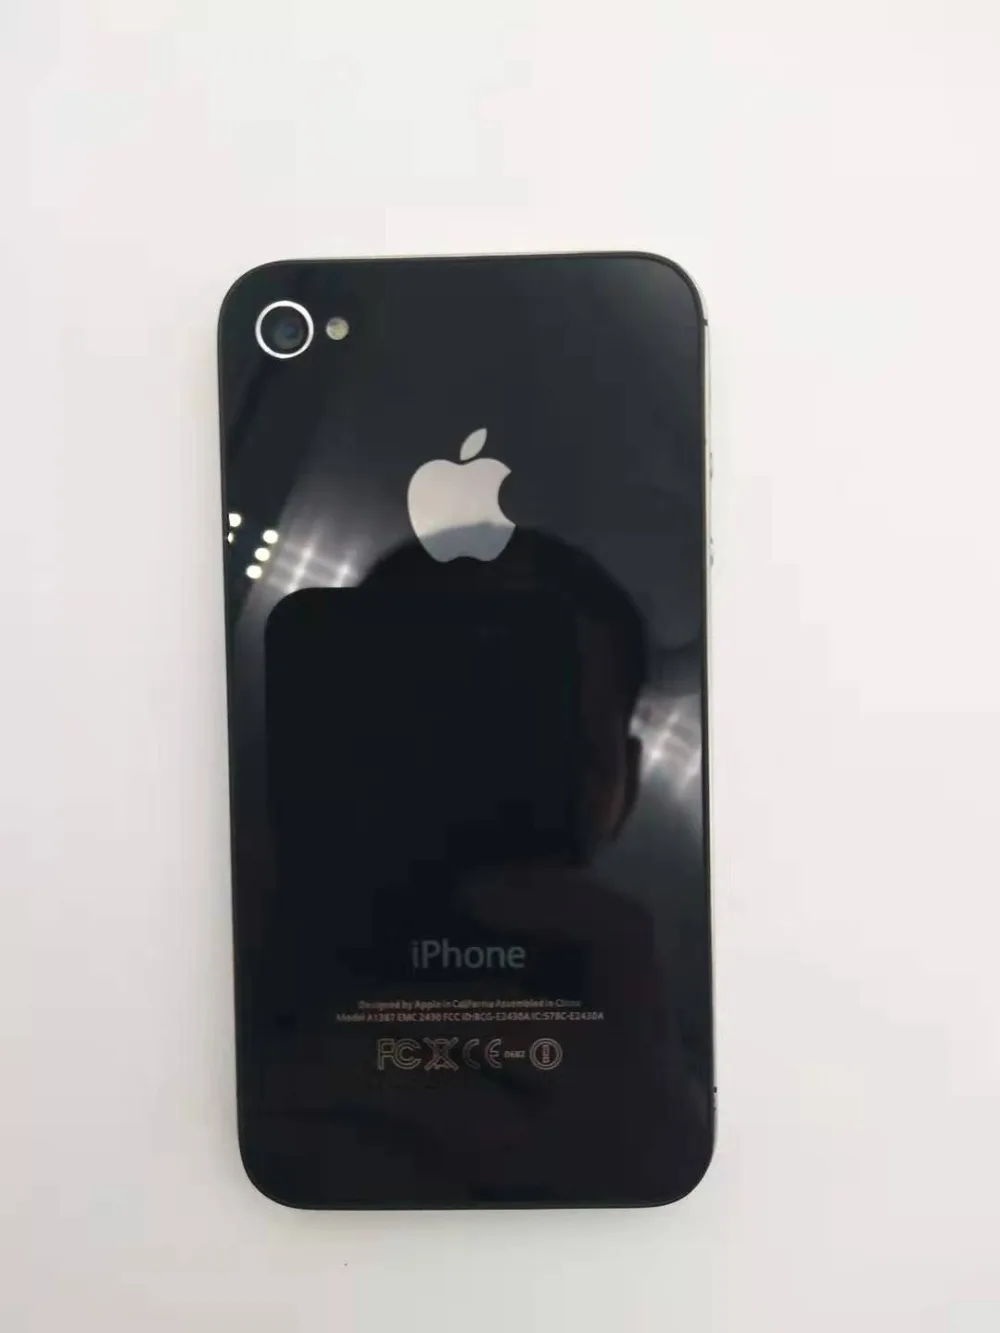 Apple iPhone 4S Used (90% New) 8GB 16GB 32GB 64GB ROM Dual Core WCDMA 3G WIFI GPS 8MP Camera Cheap Smartphone Cell Phone